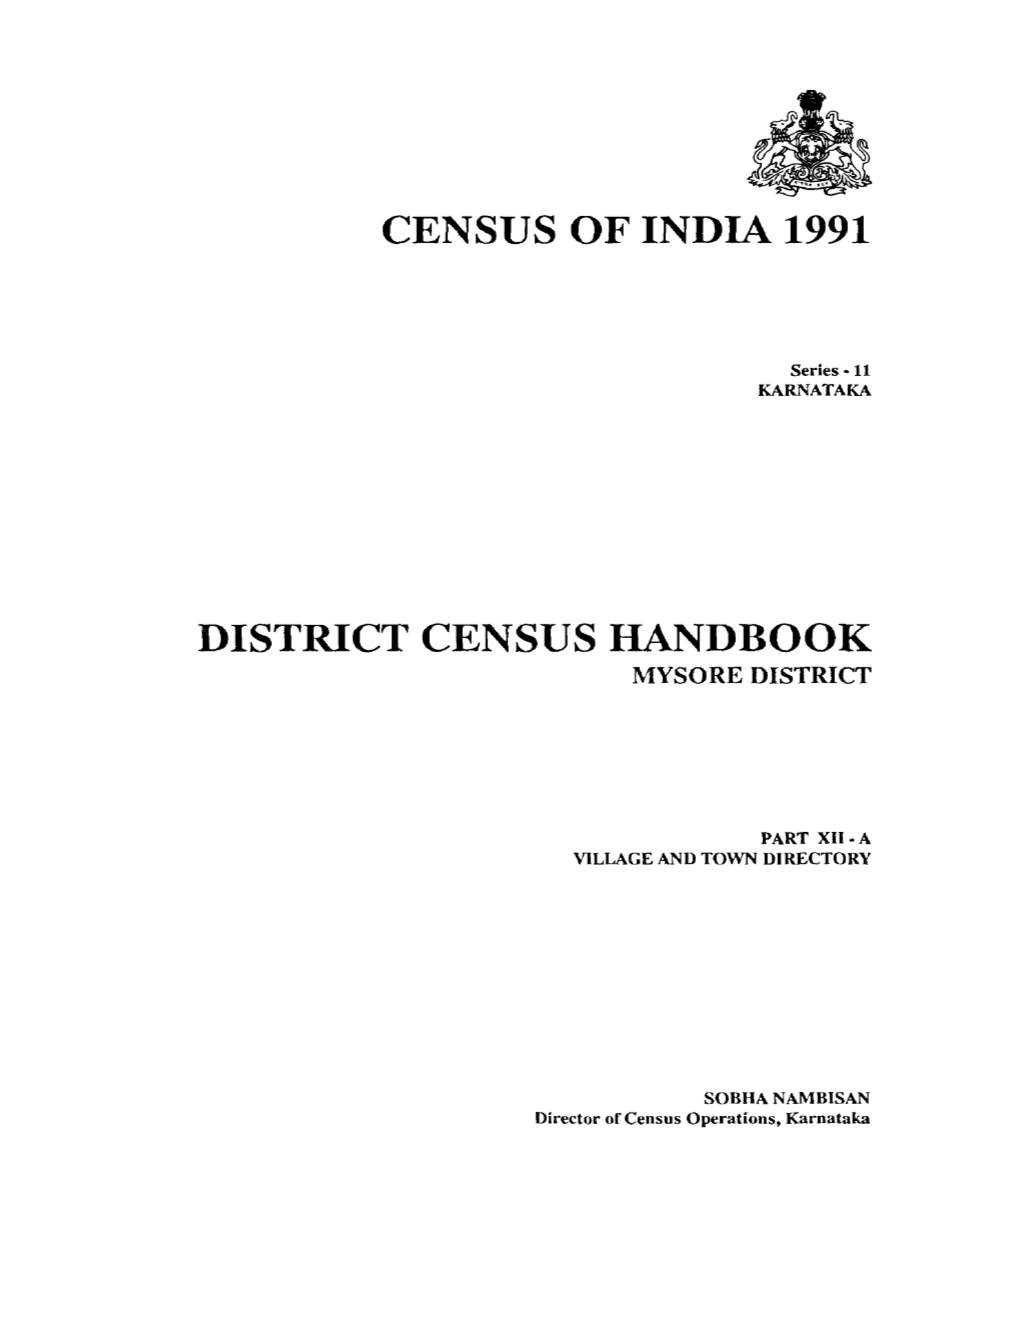 District Census Handbook, Mysore, Part XII-A, Series-11